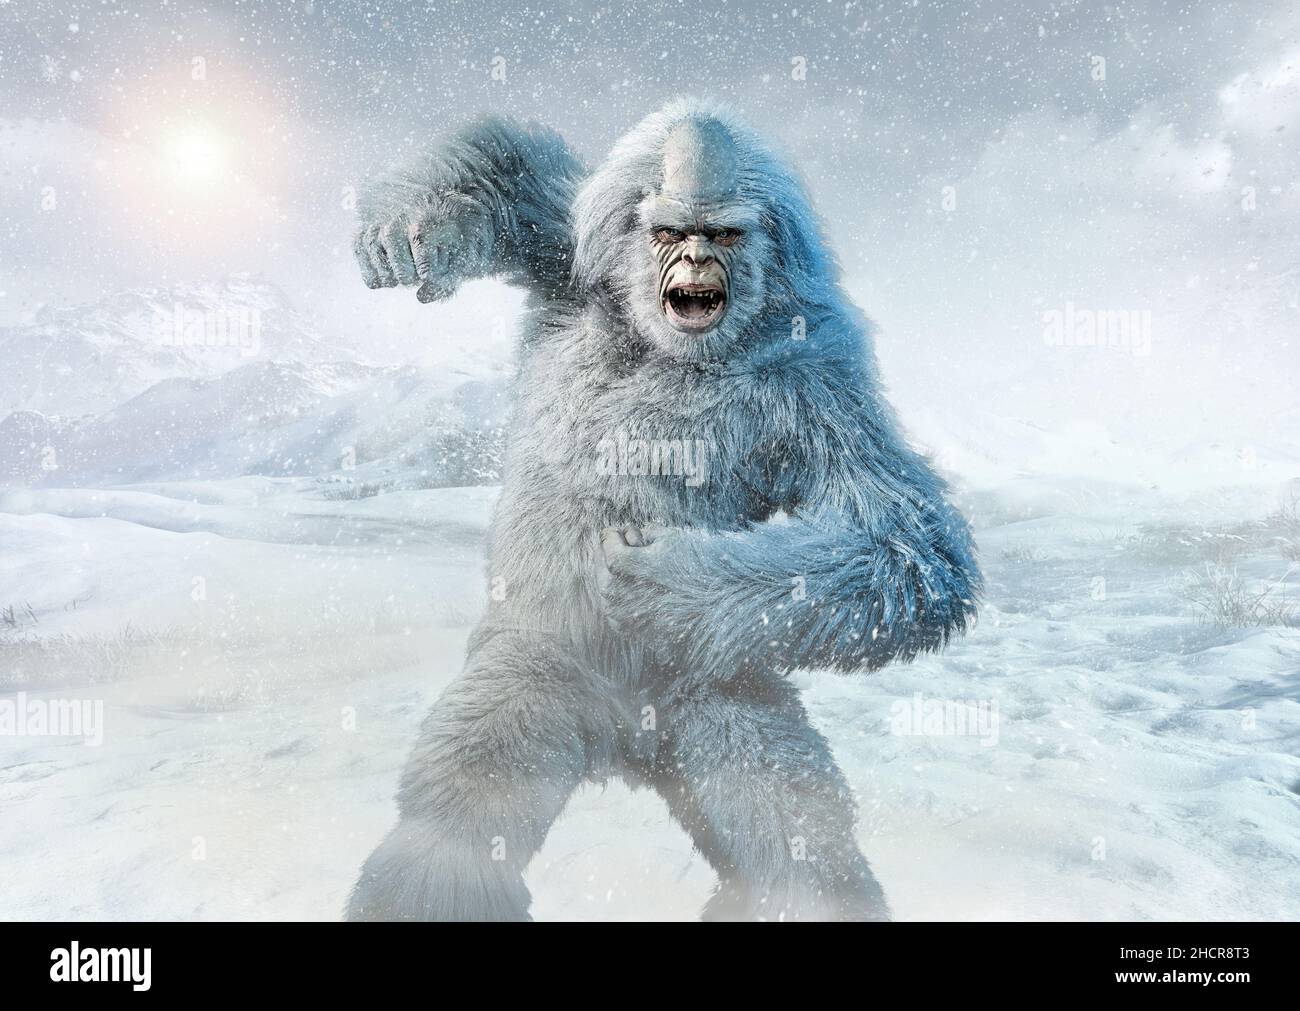 Yeti or abominable snowman 3D illustration Stock Photo